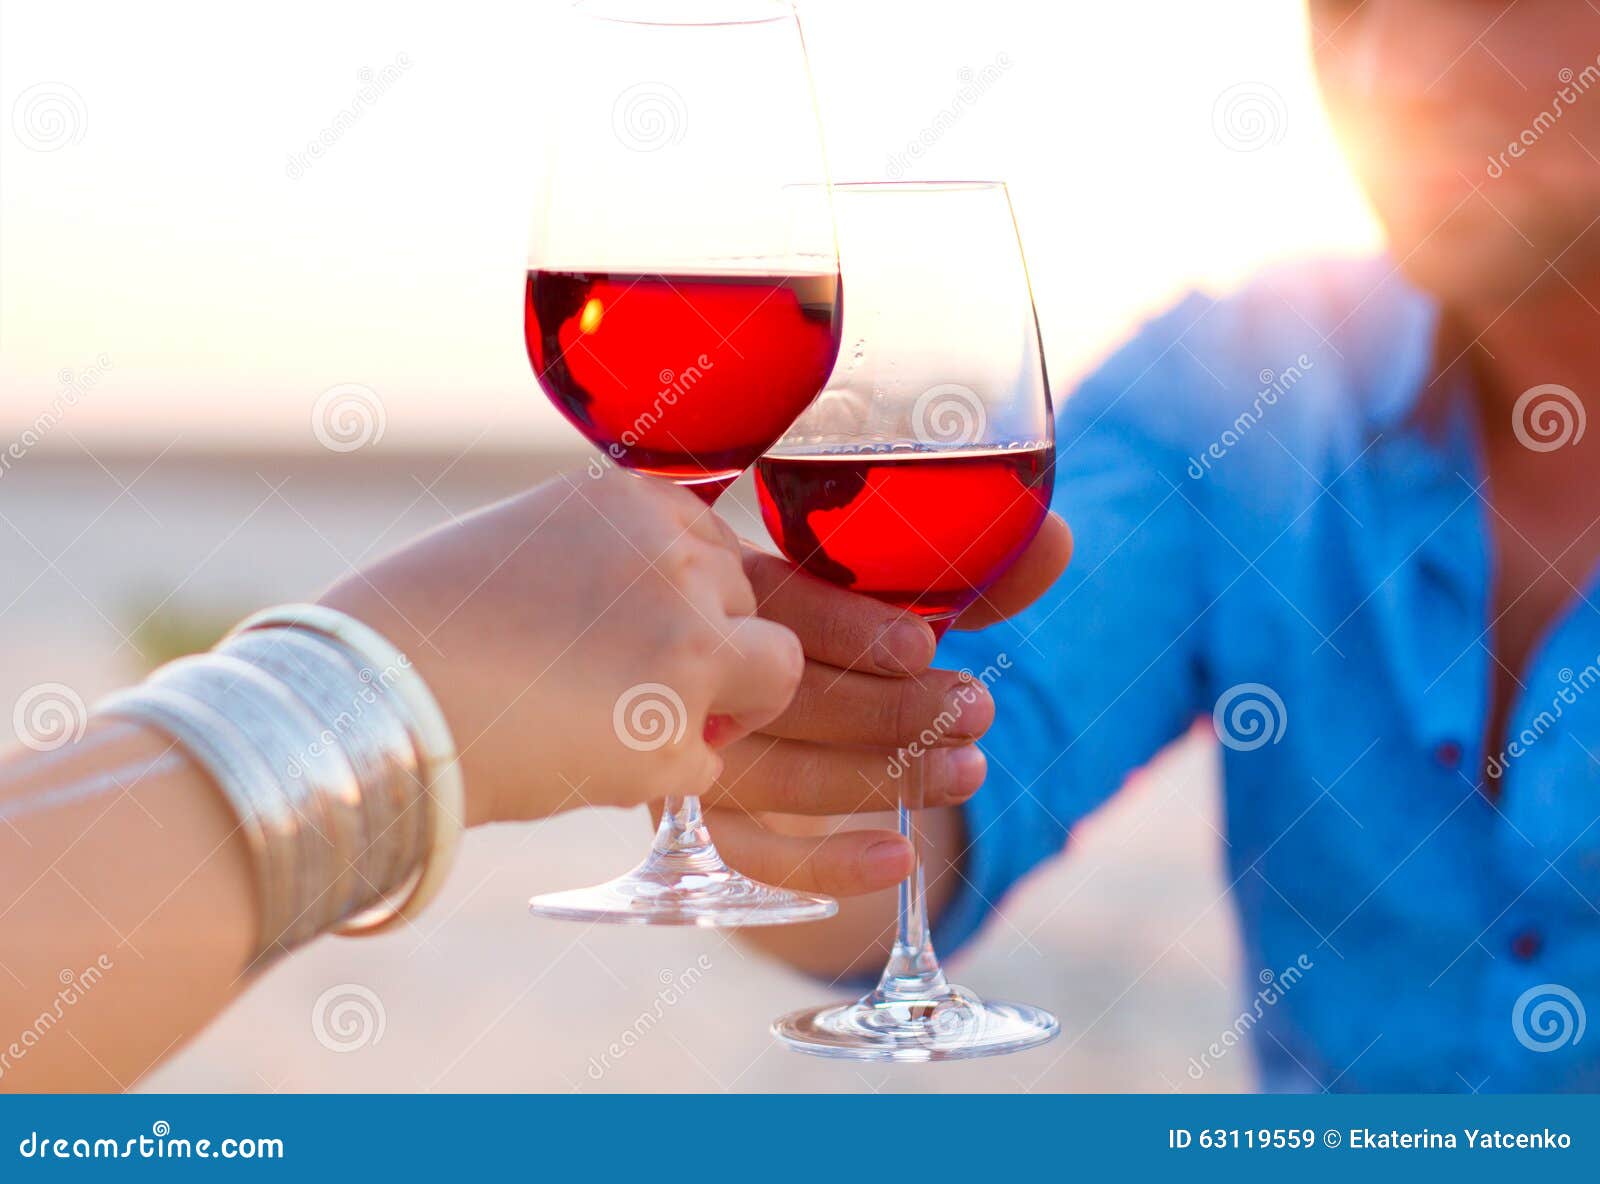 close-up of two humanÃ¢â¬â¢s hand with wineglasses red wine during